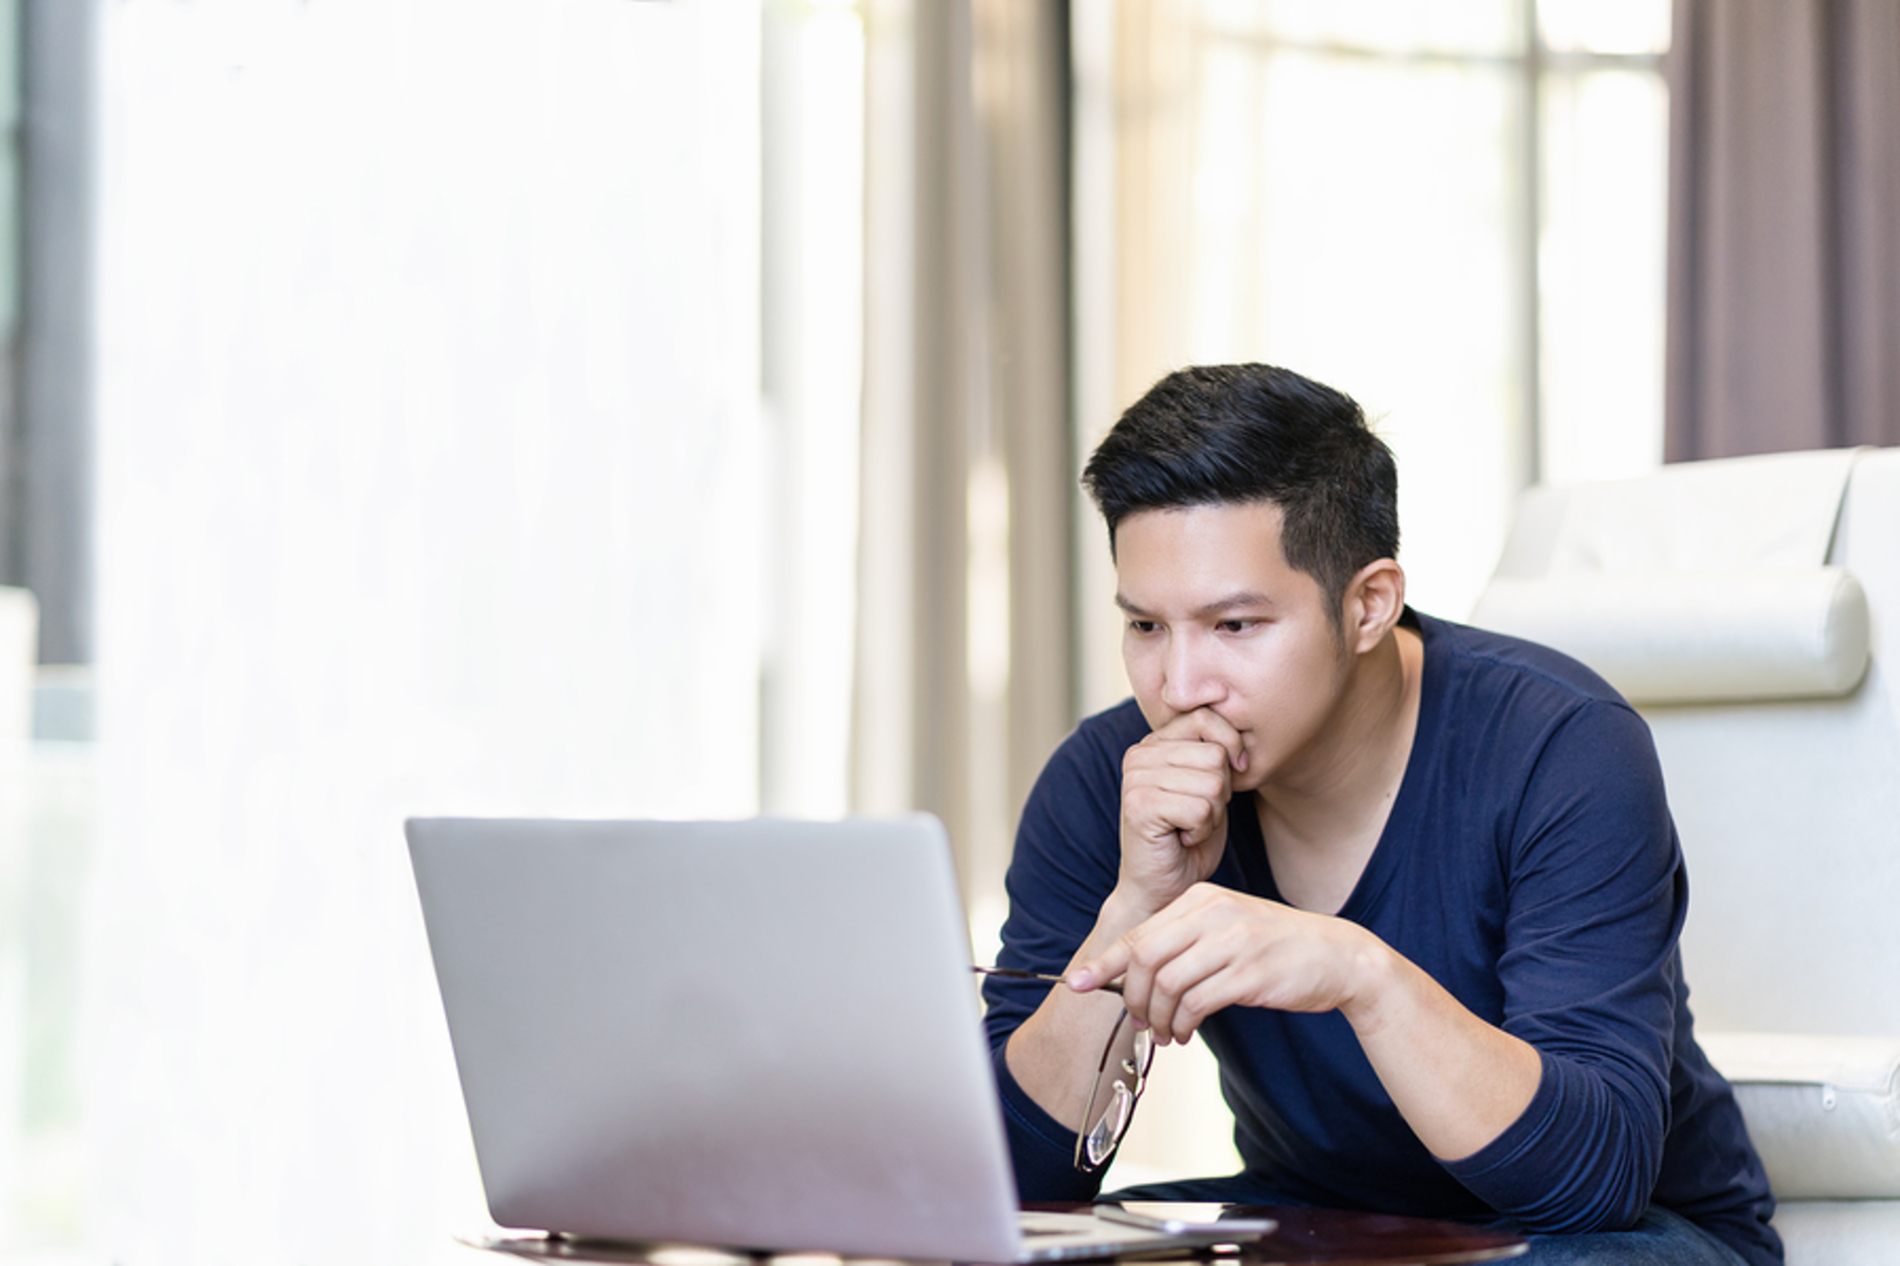 Man looking at a laptop computer screen.